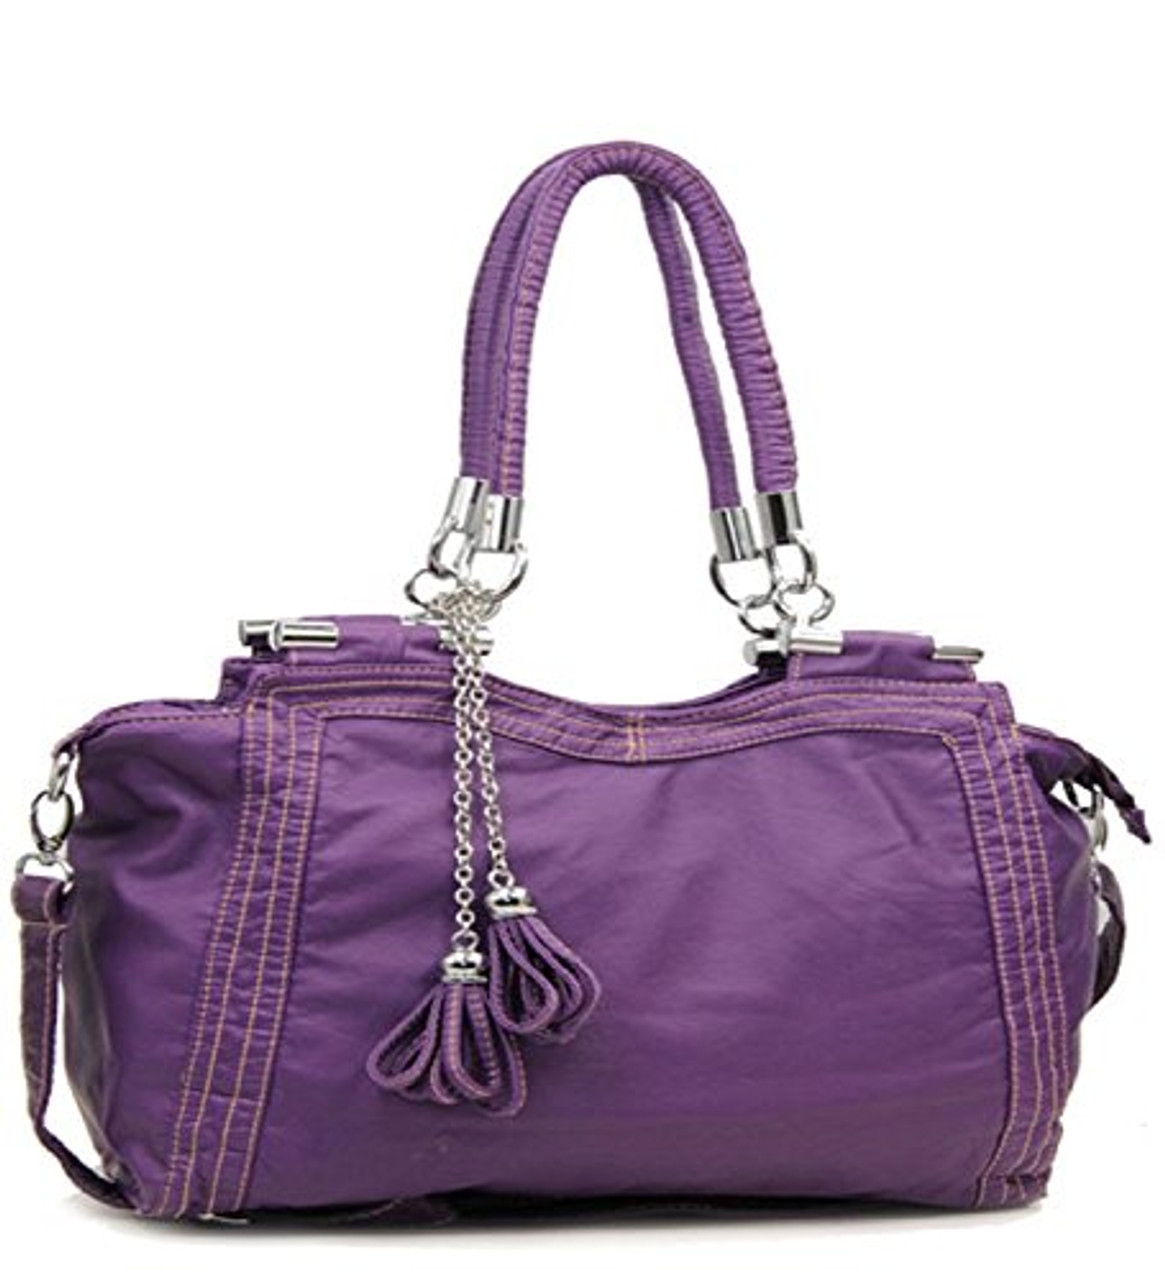 Purple Retro Designer Inspired Tassle Purse - Handbags, Bling & More!